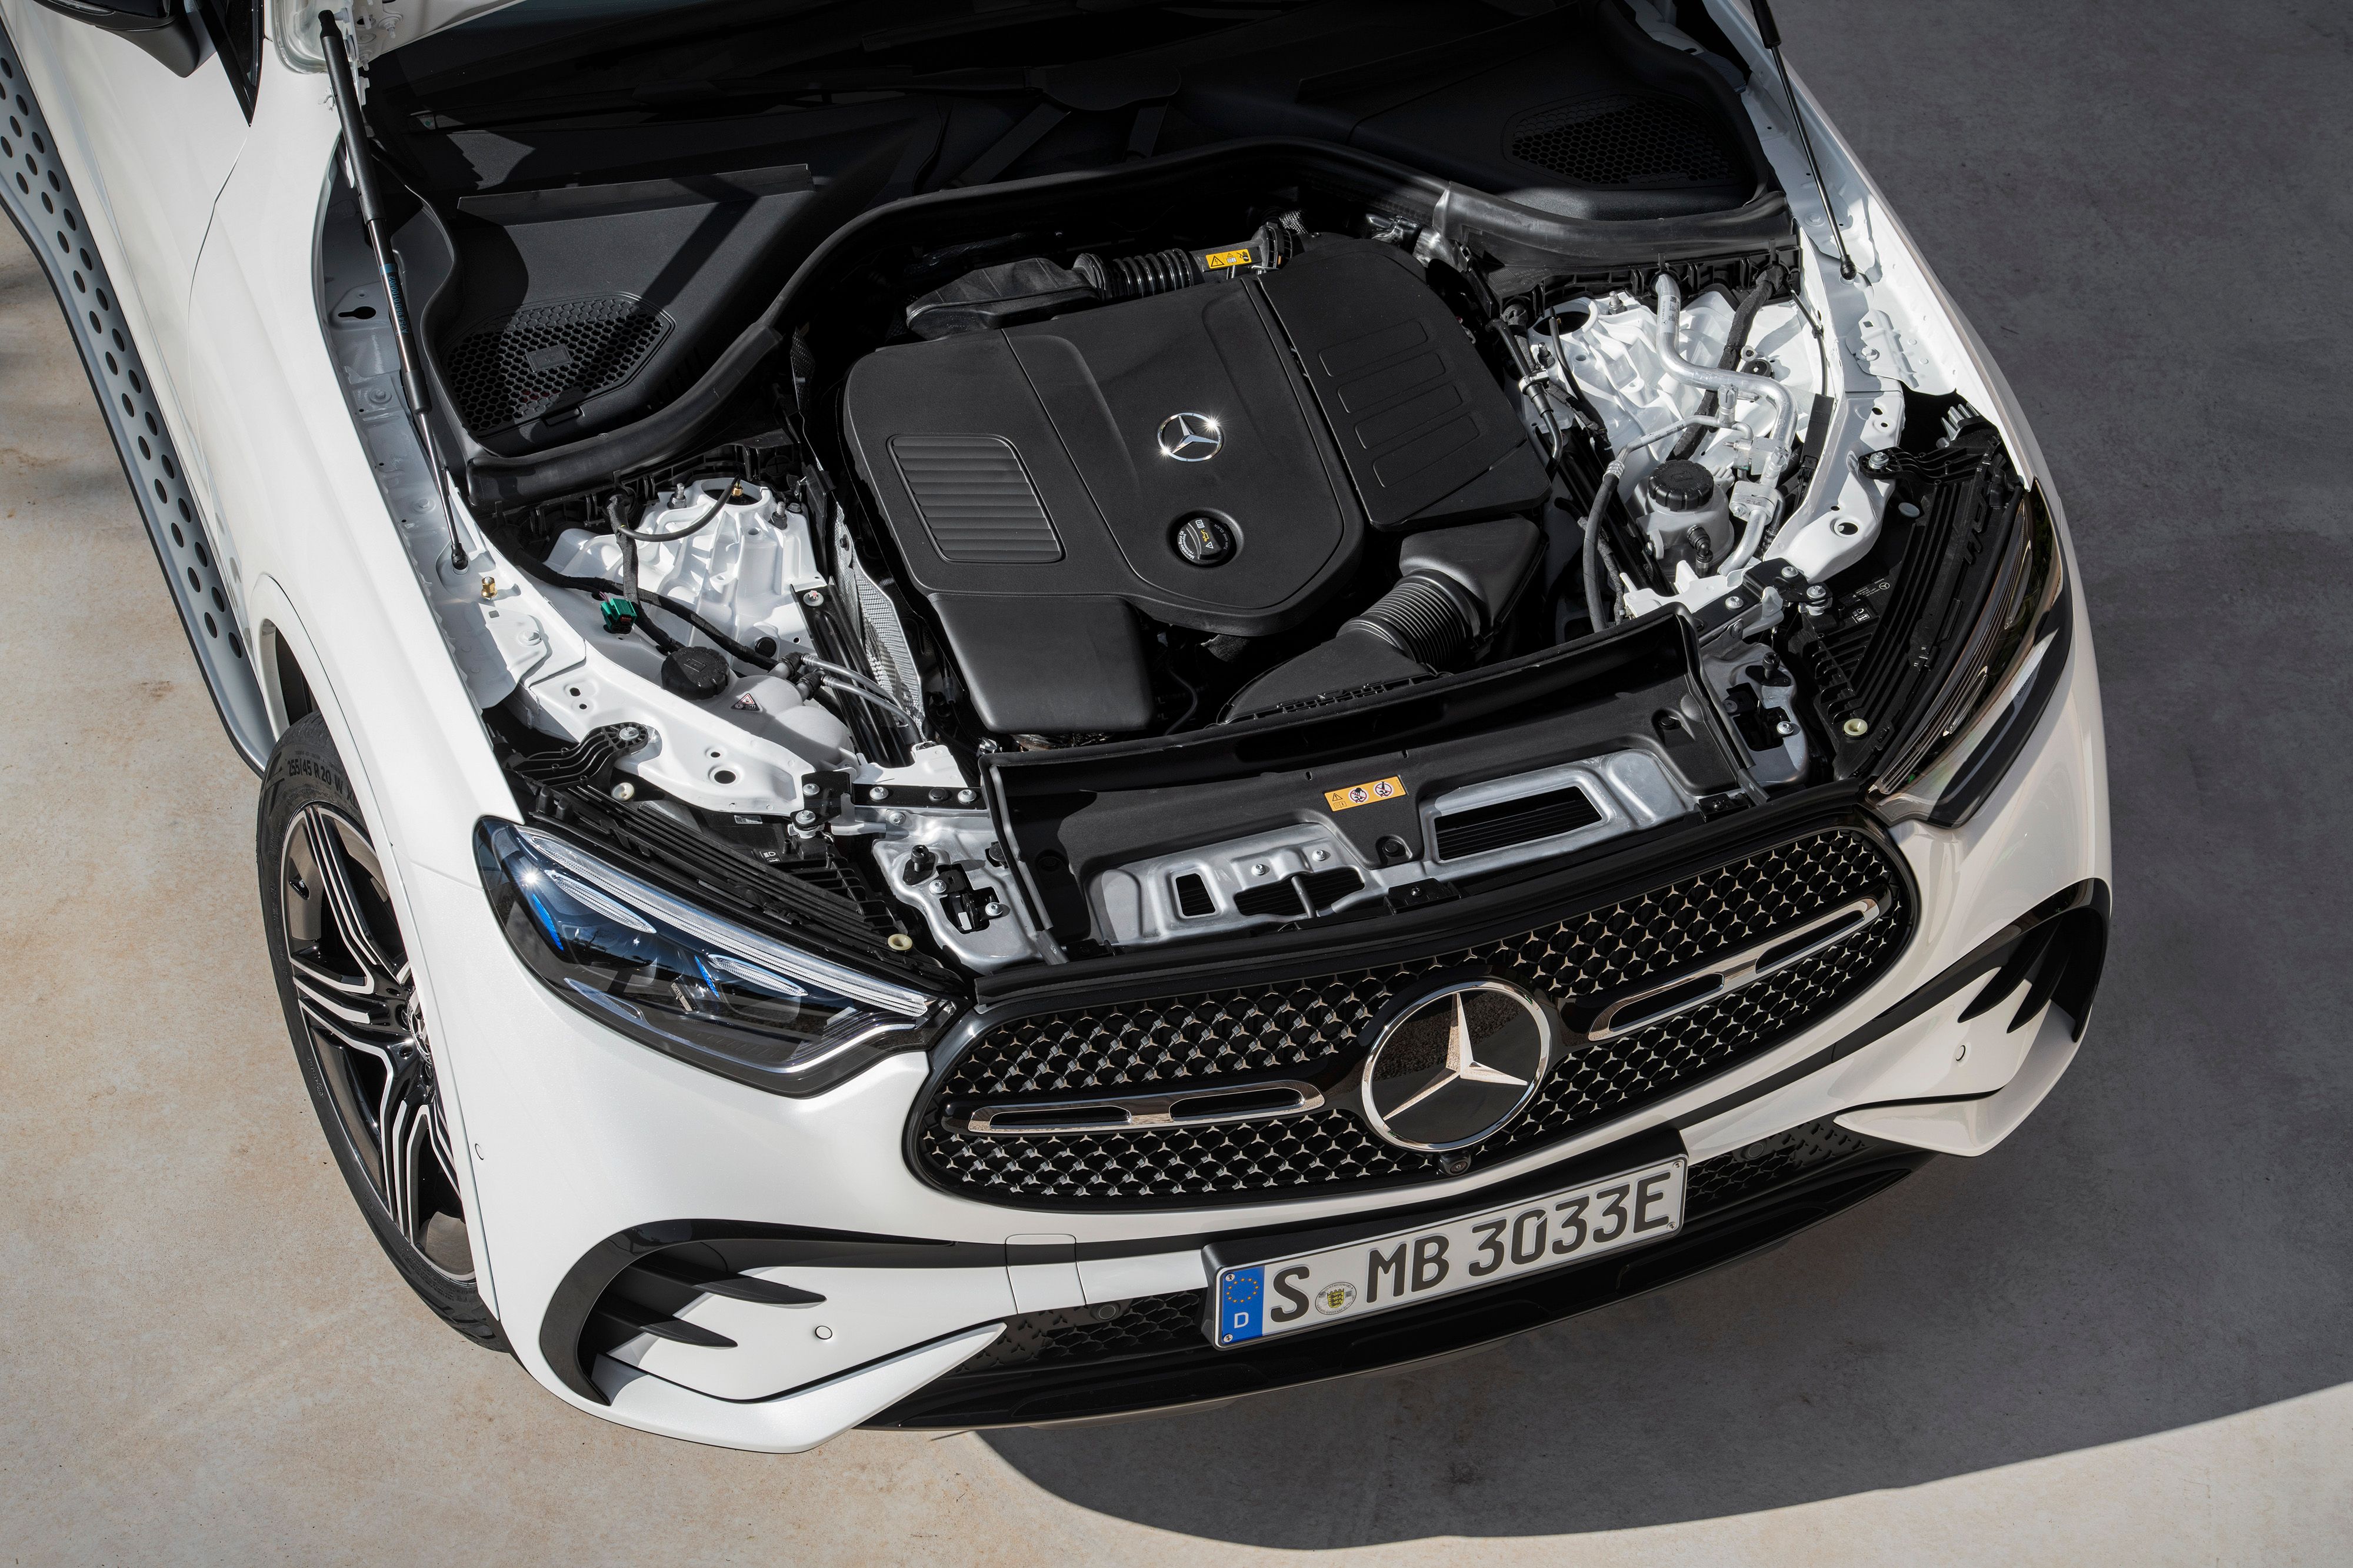 2023 Mercedes-Benz GLC - Performance, Price and Photos